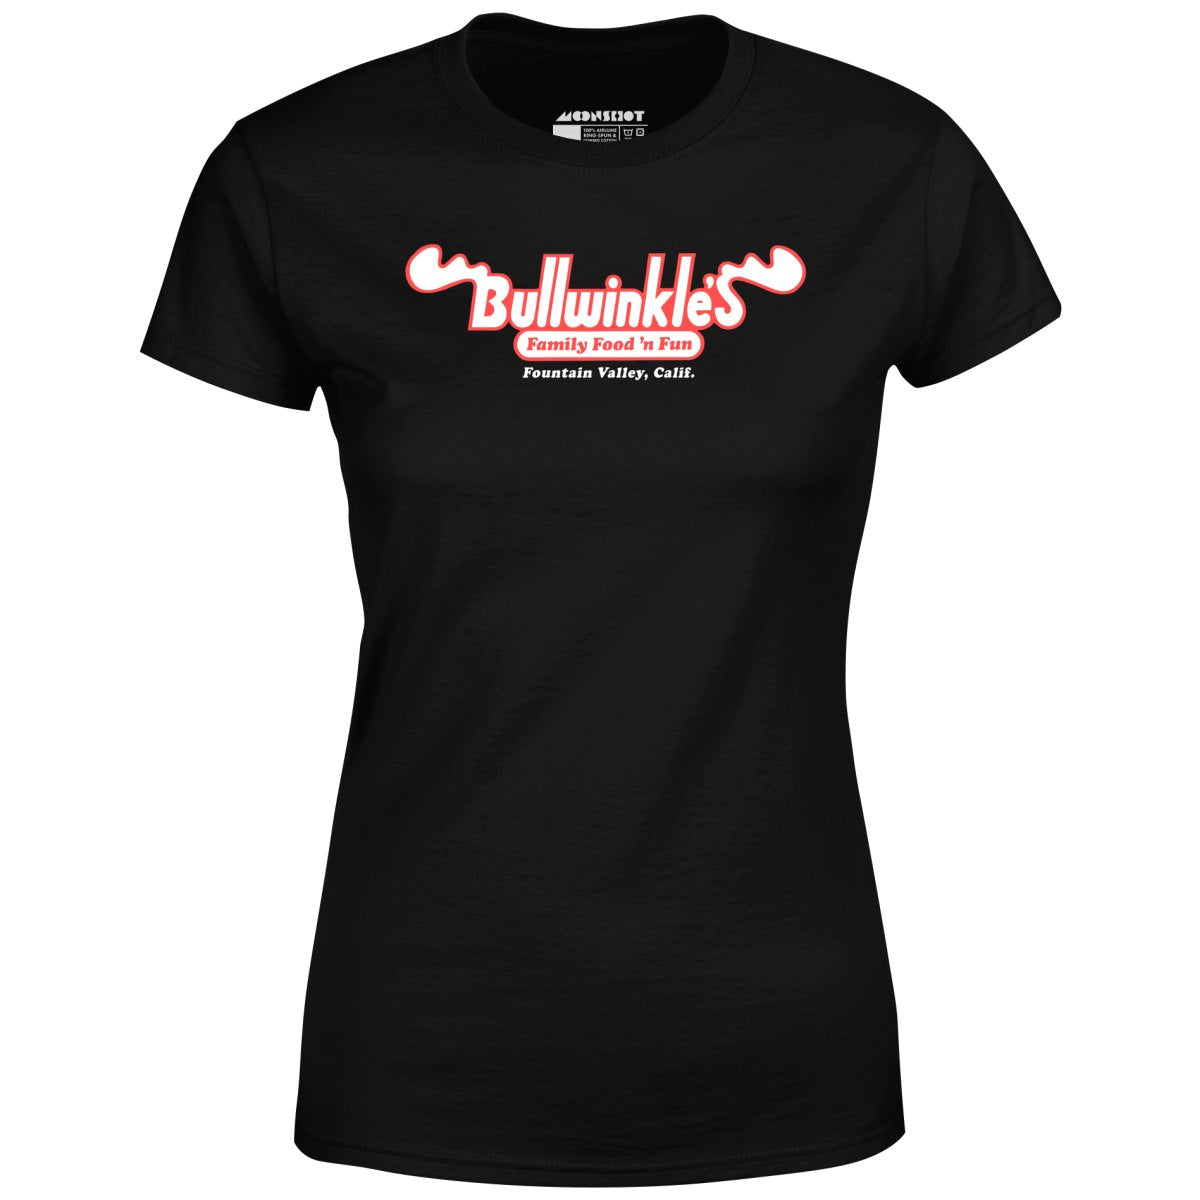 Bullwinkles - Fountain Valley, CA - Vintage Amusement Park - Women's T-Shirt